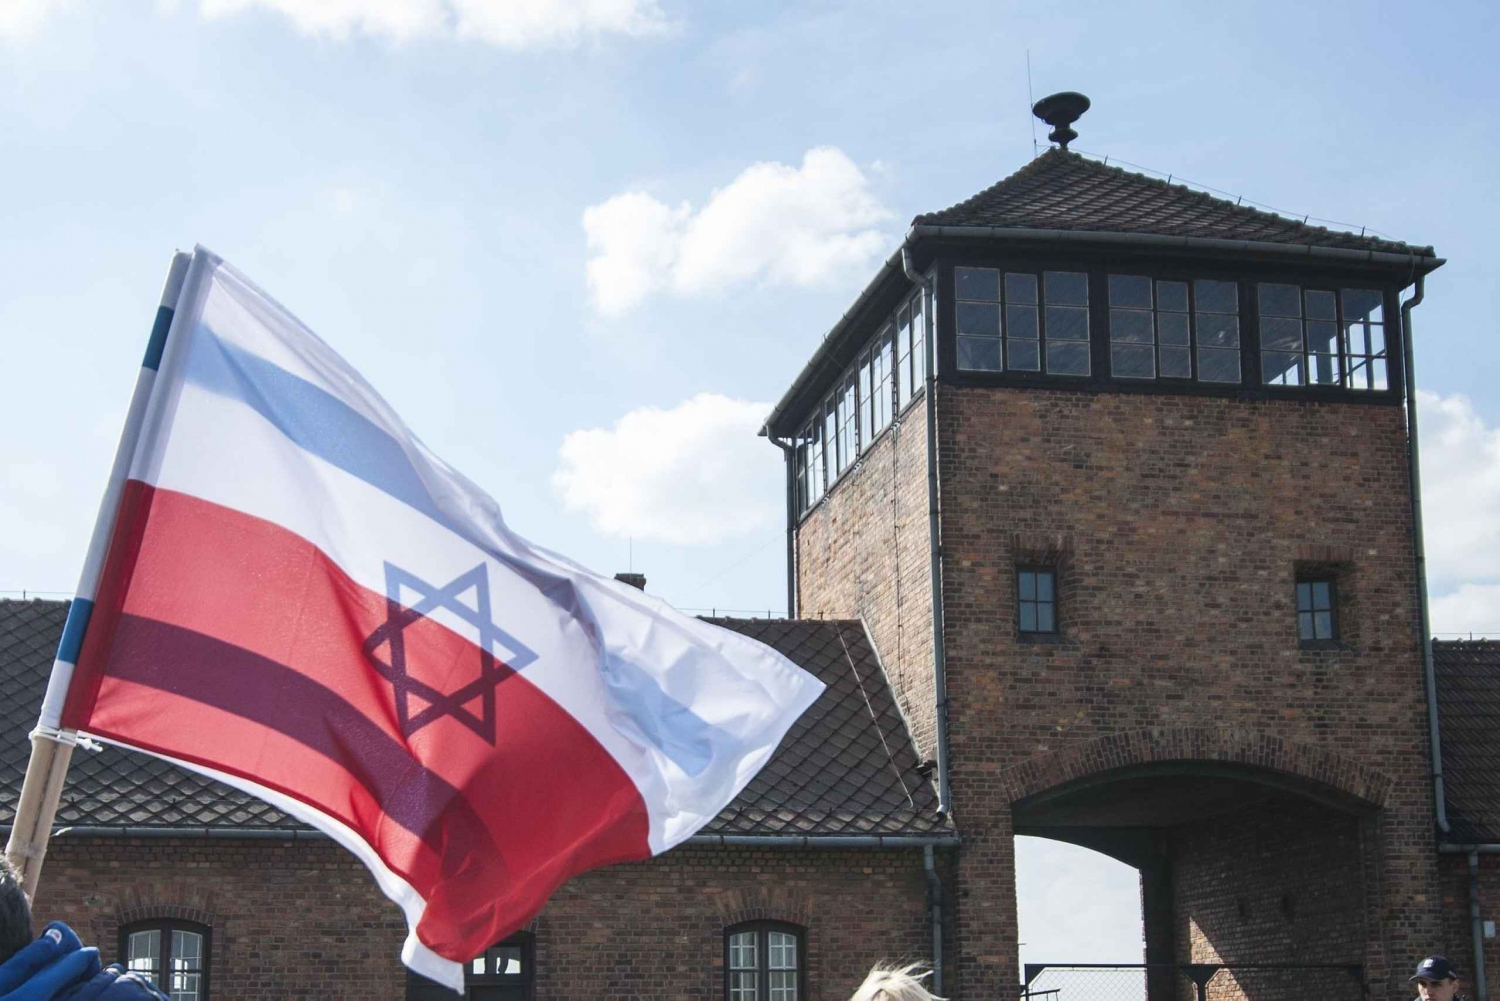 Skip-the-line Auschwitz-Birkenau Camp Tour with Transport